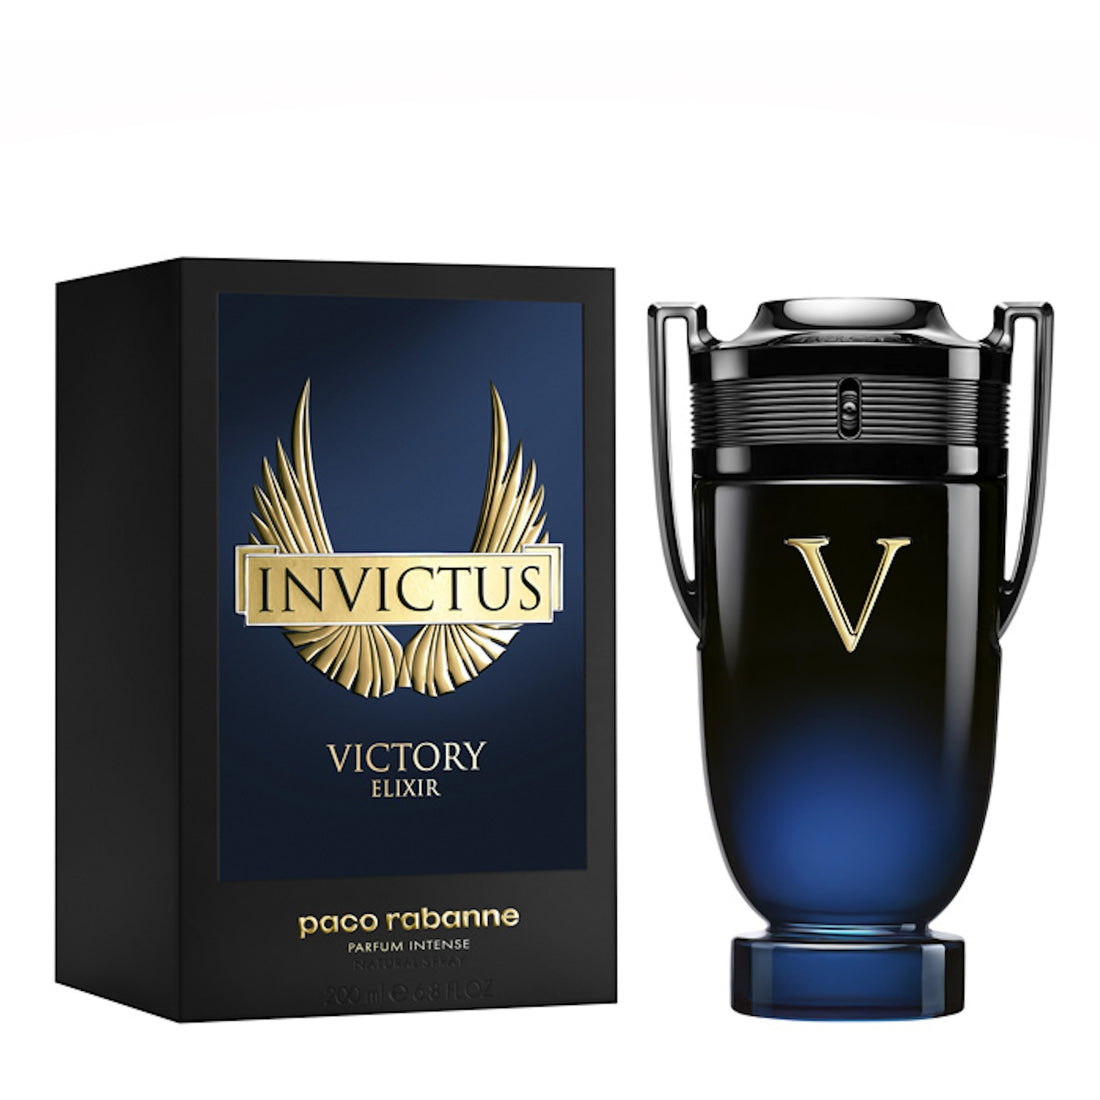 Paco Rabanne Invictus Victory Elixir Parfum 200ml Spray